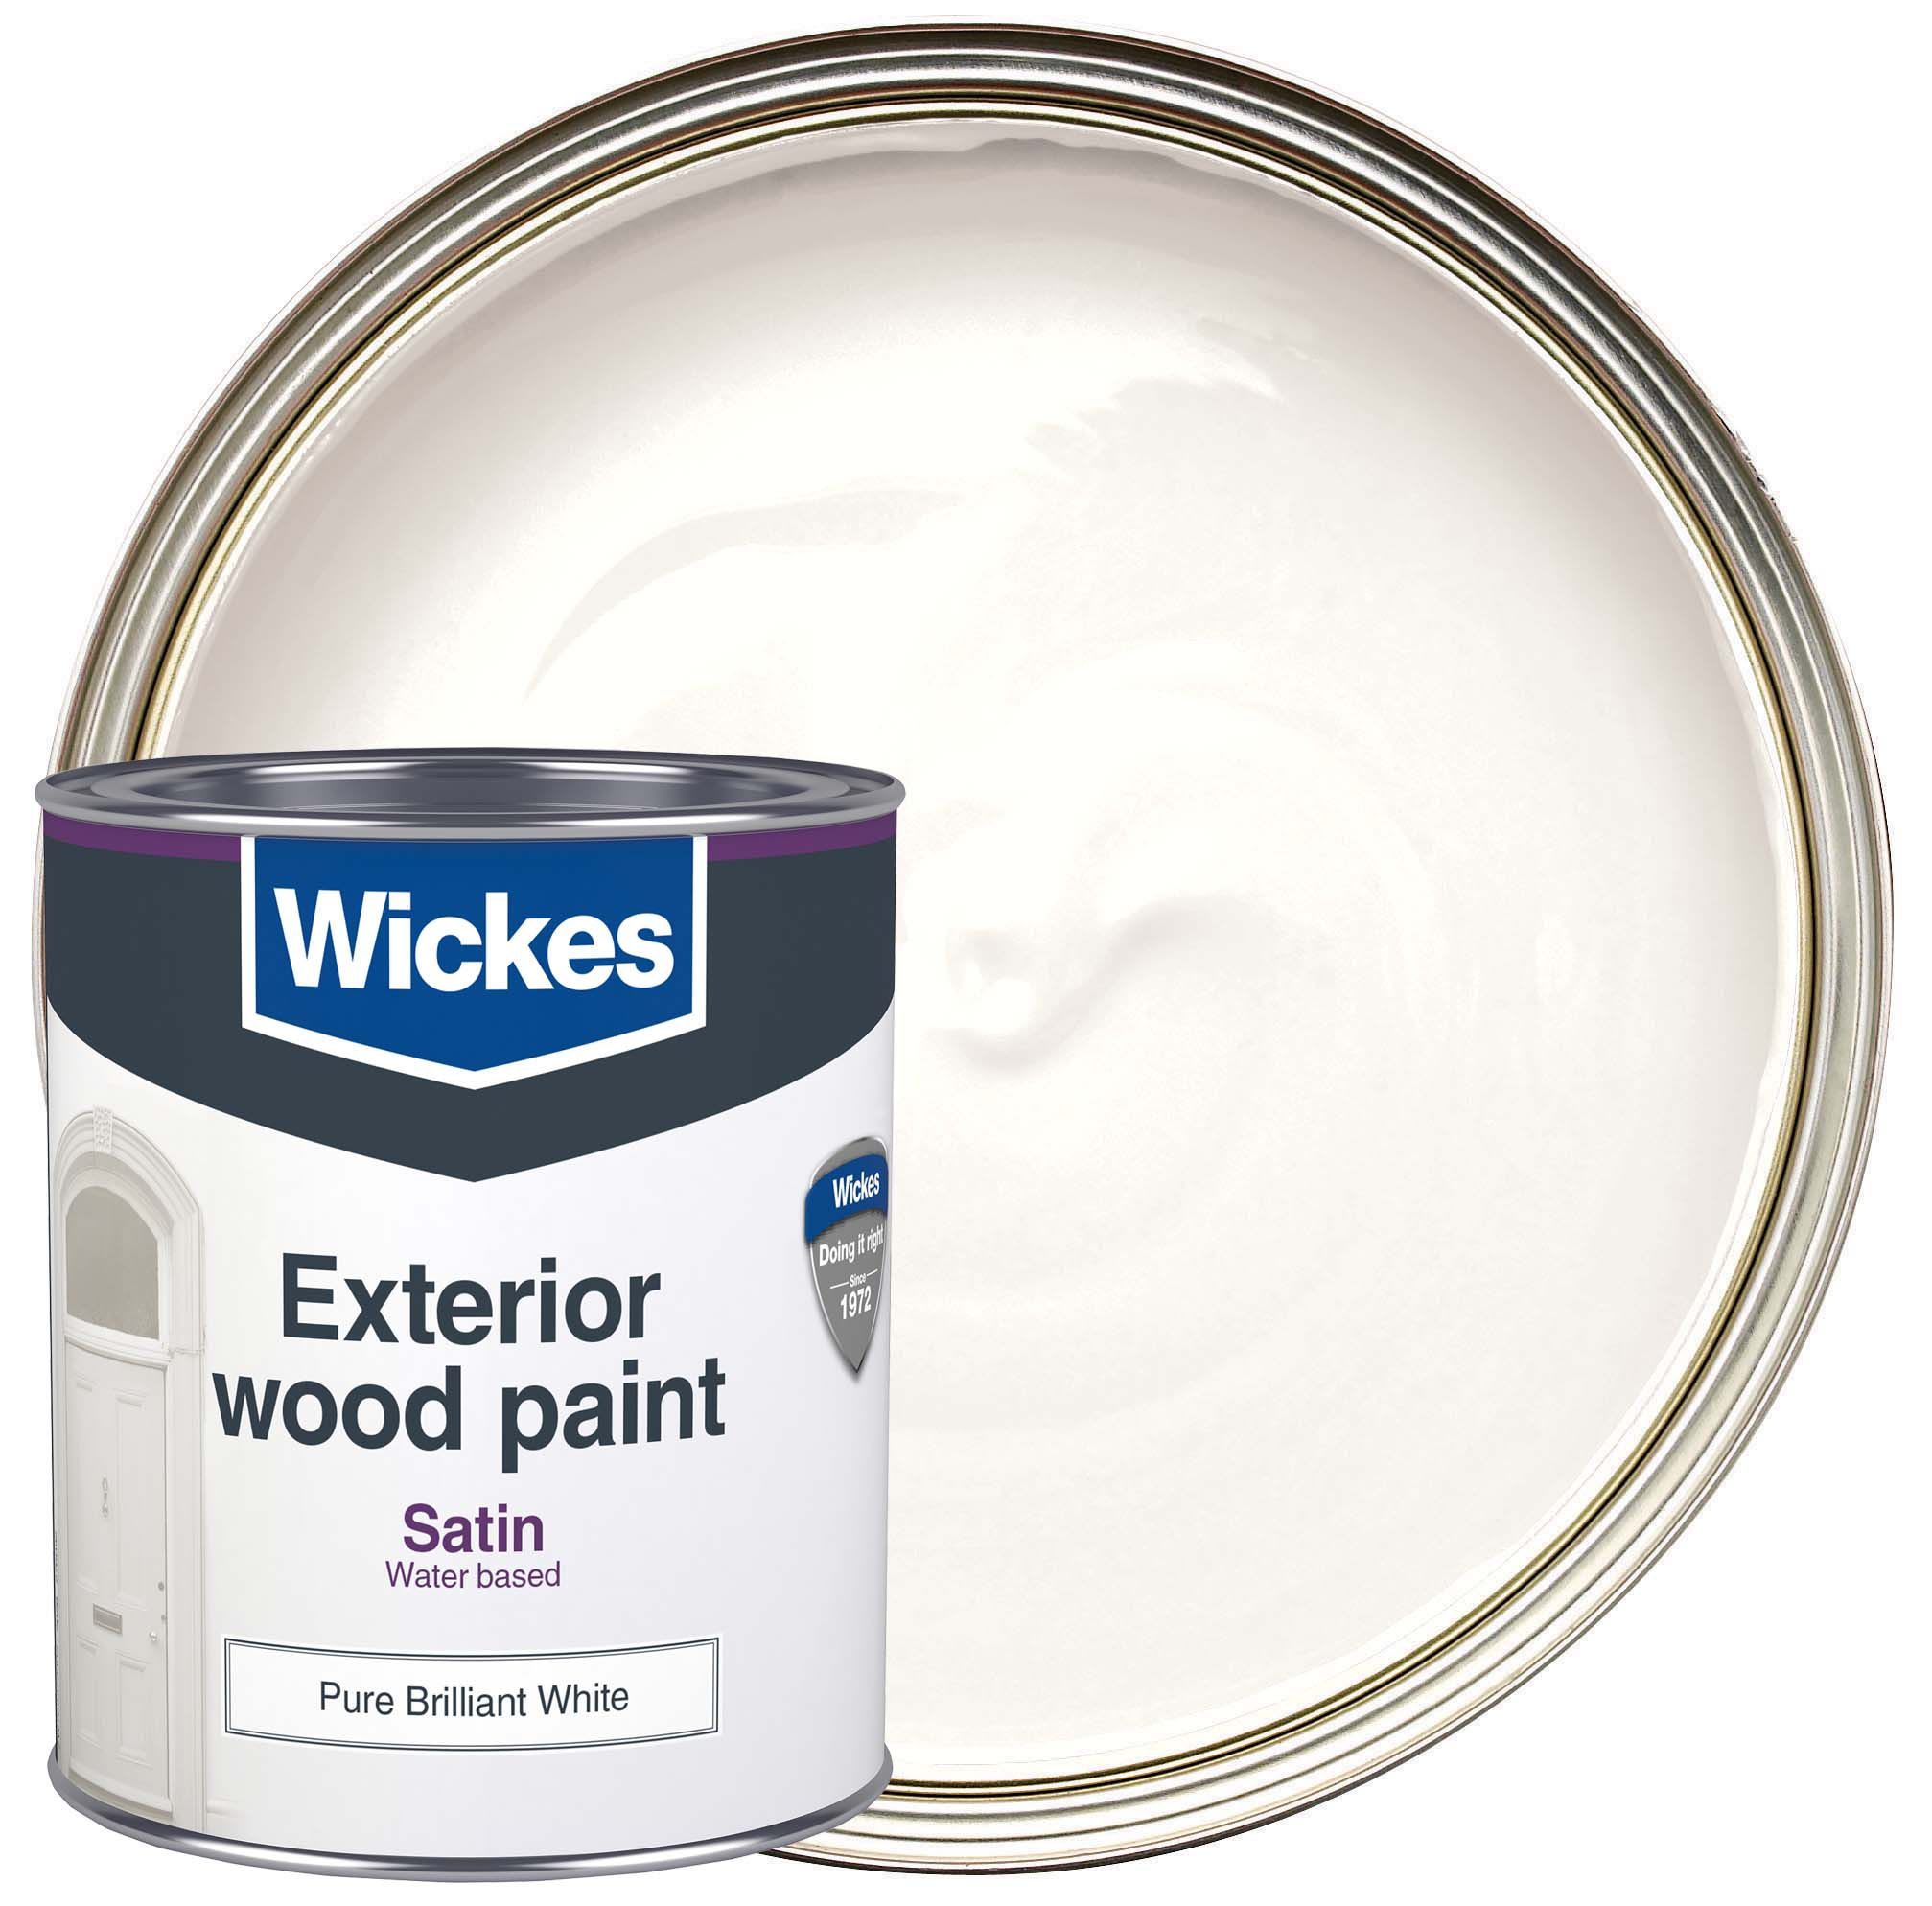 Wickes Exterior Satinwood Paint Pure Brilliant White 750ml